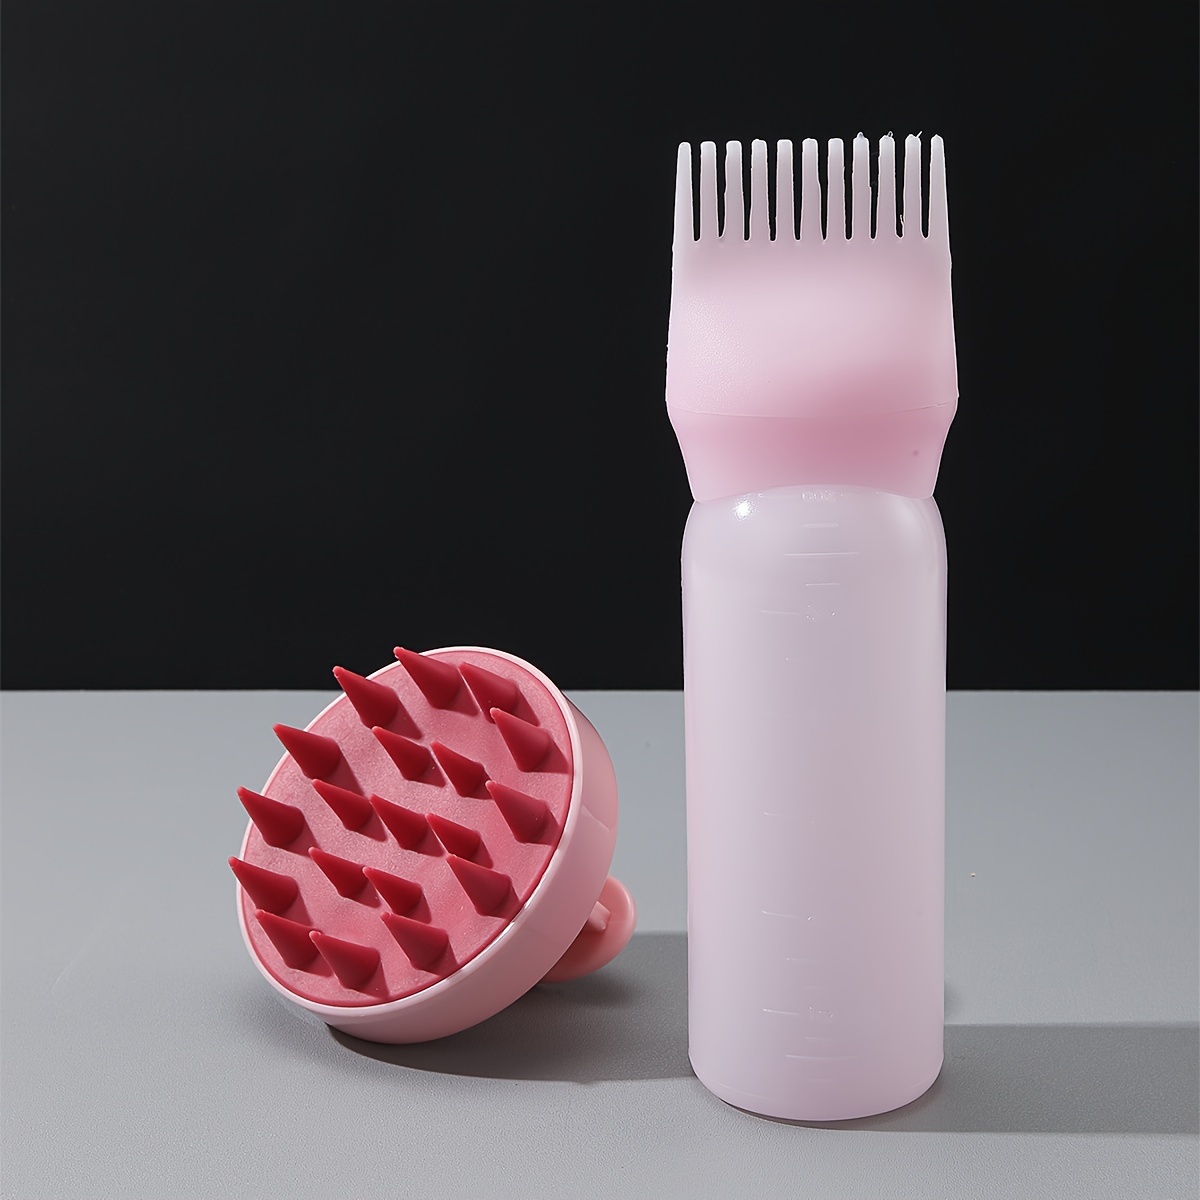 

2pcs/set Hair Dye Applicator Brush Bottles Dyeing Shampoo Bottle Silicone Hair Washing Brush Scalp Massage Brush